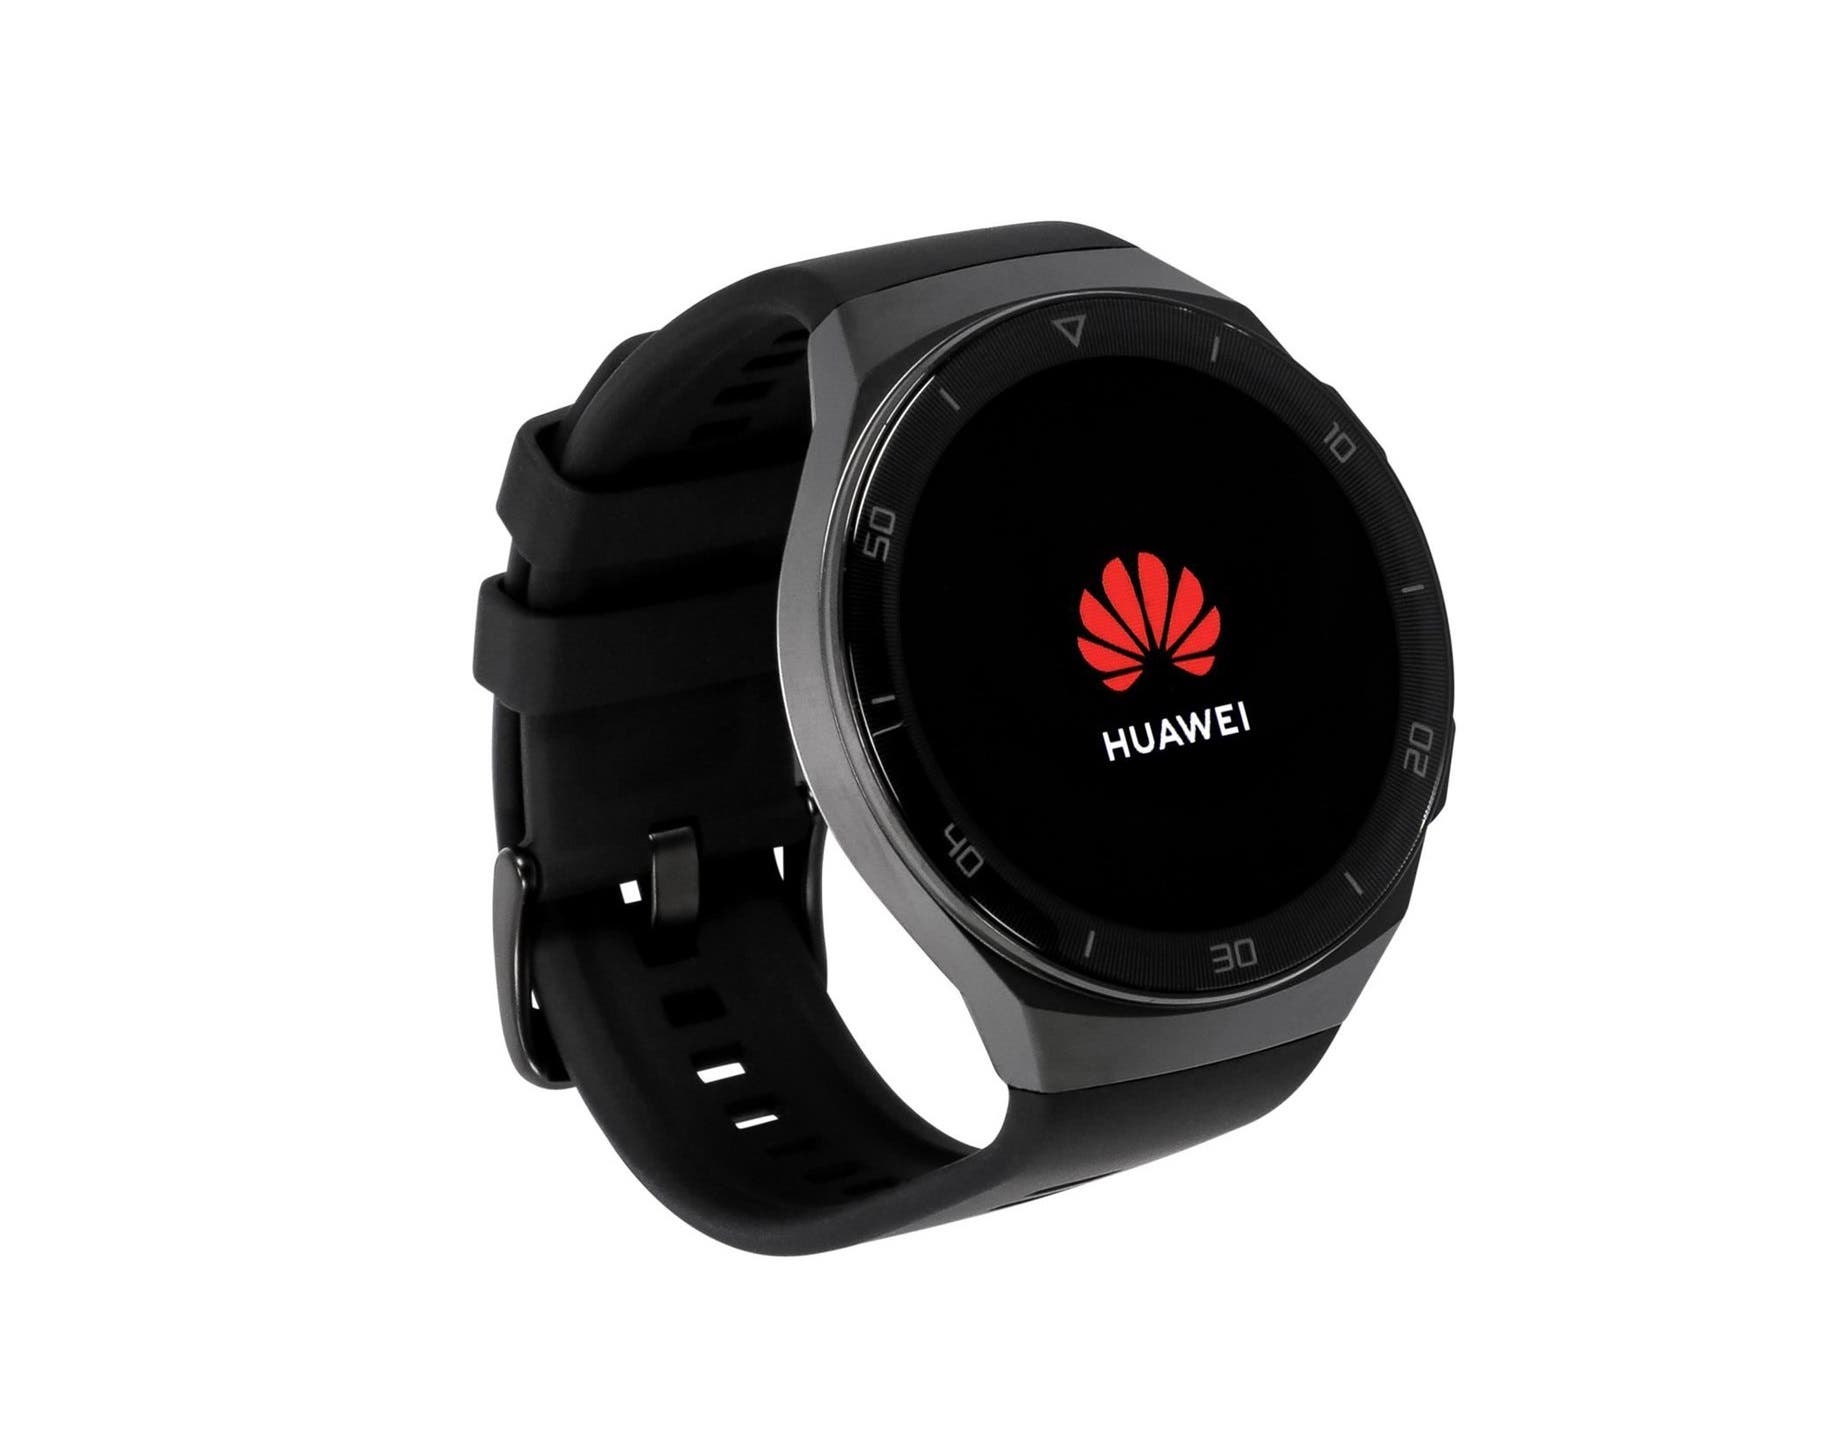 Huawei new часы. Huawei SMARTWATCH 2021. Смарт часы Хуавей 7. Часы Хуавей 2021. Huawei Smart часы New.